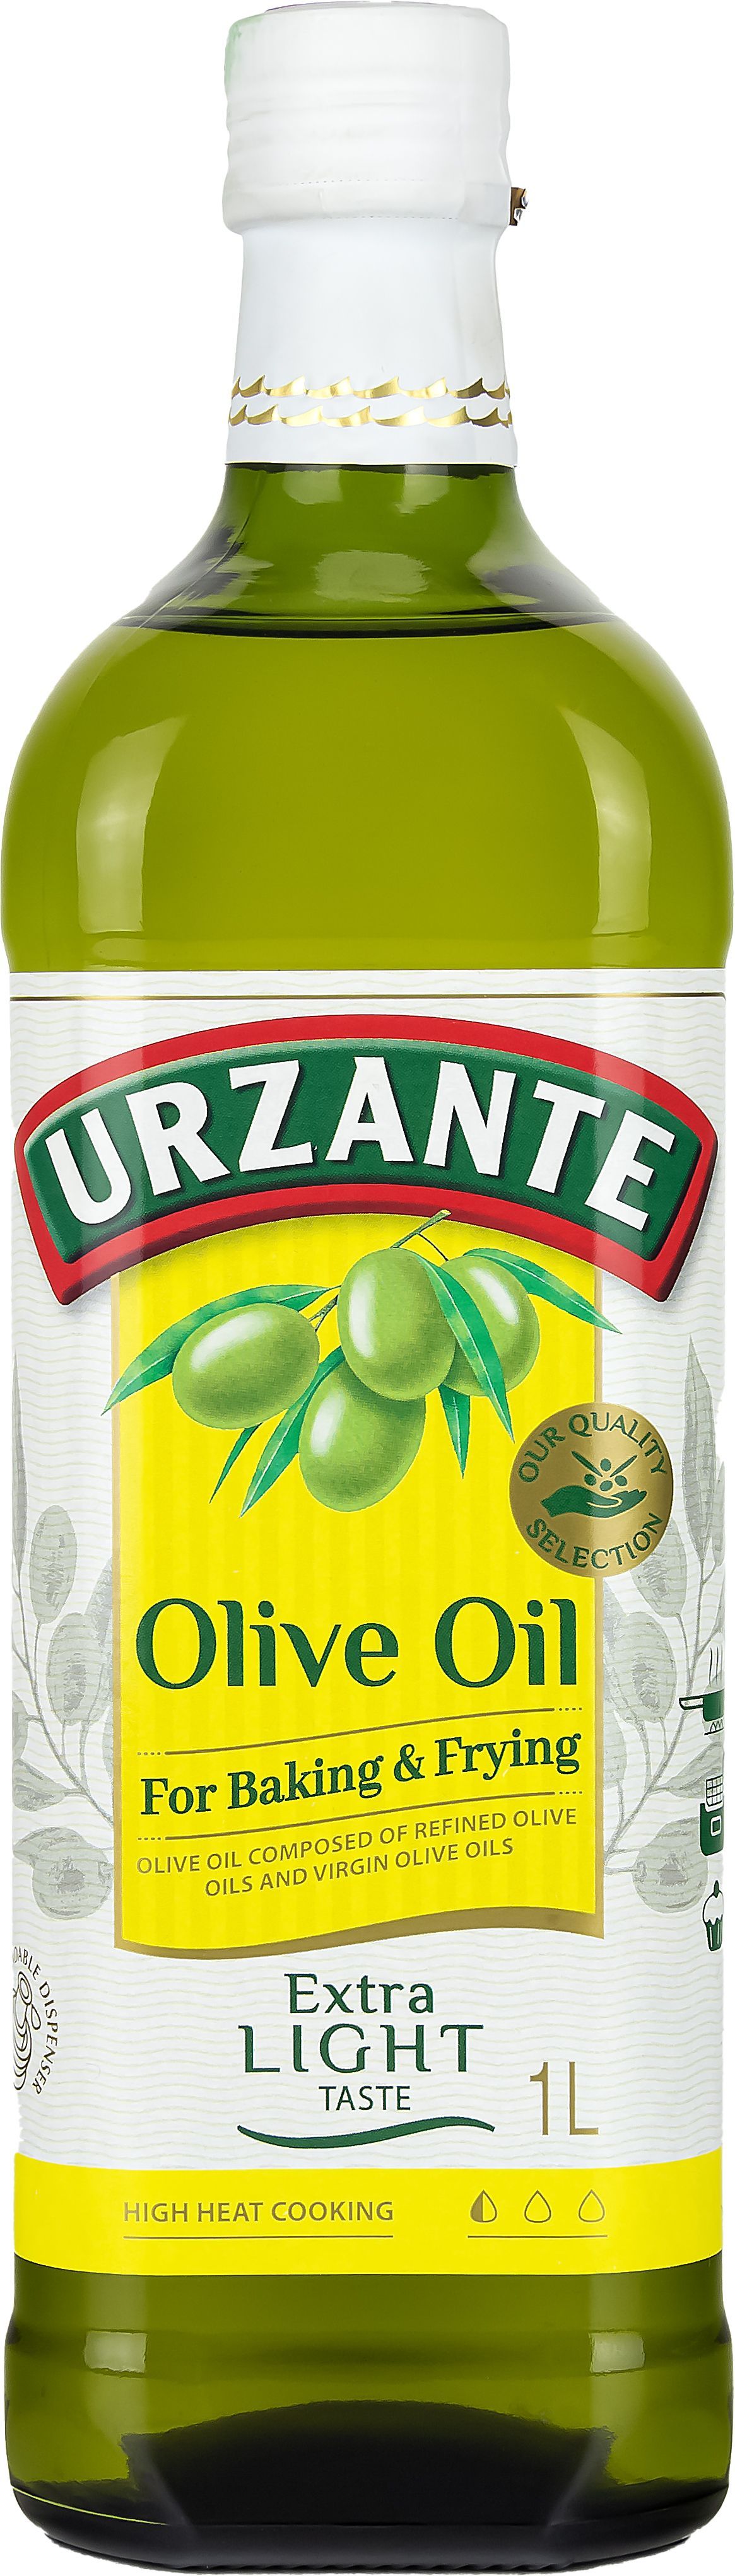 Urzante оливковое масло. Luglio оливковое масло.